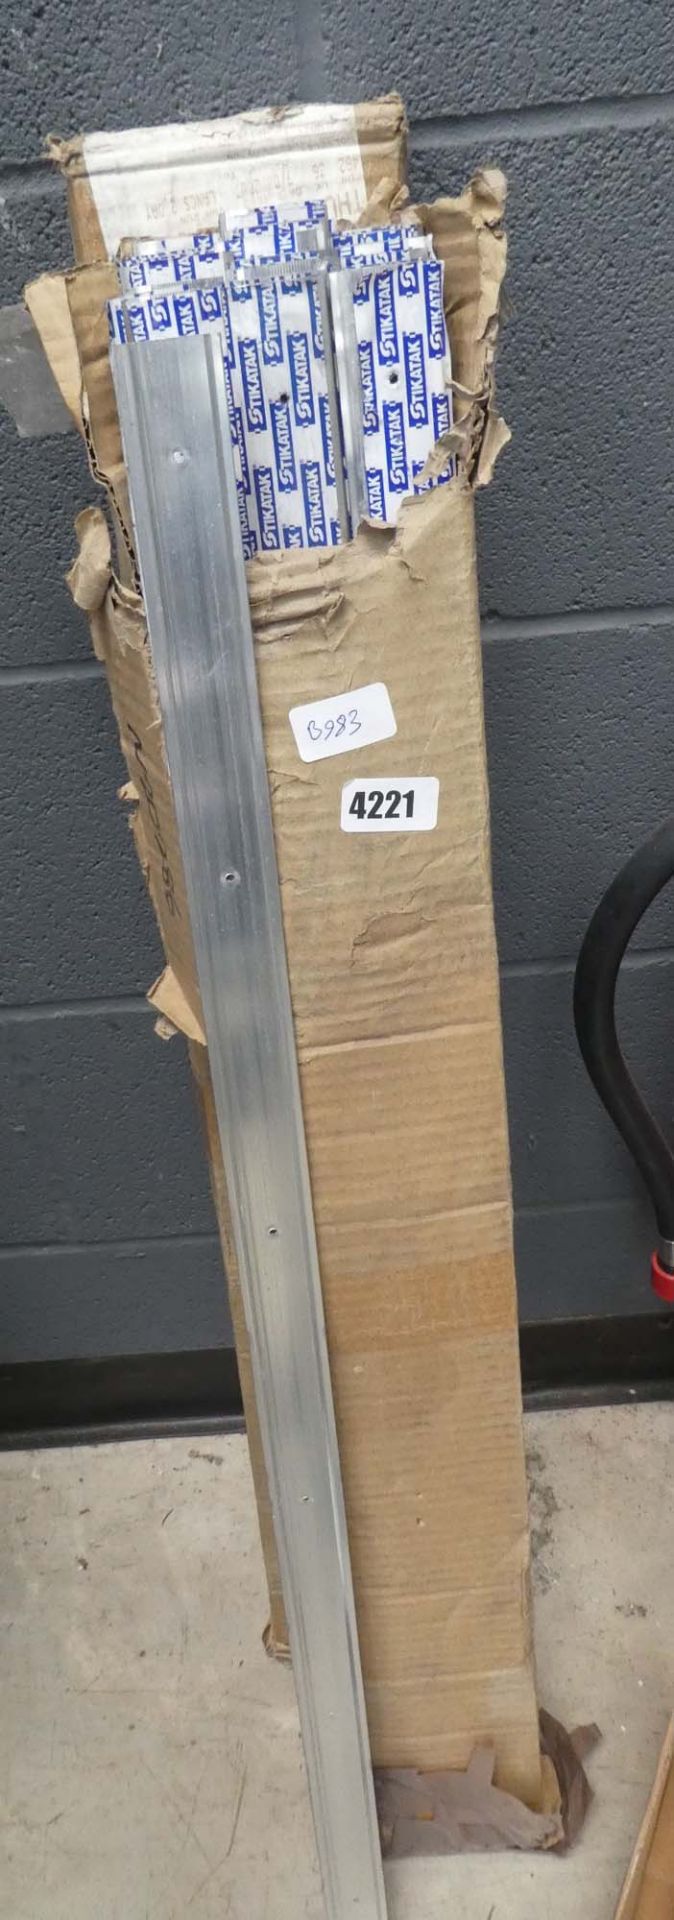 2x small boxes of door bars